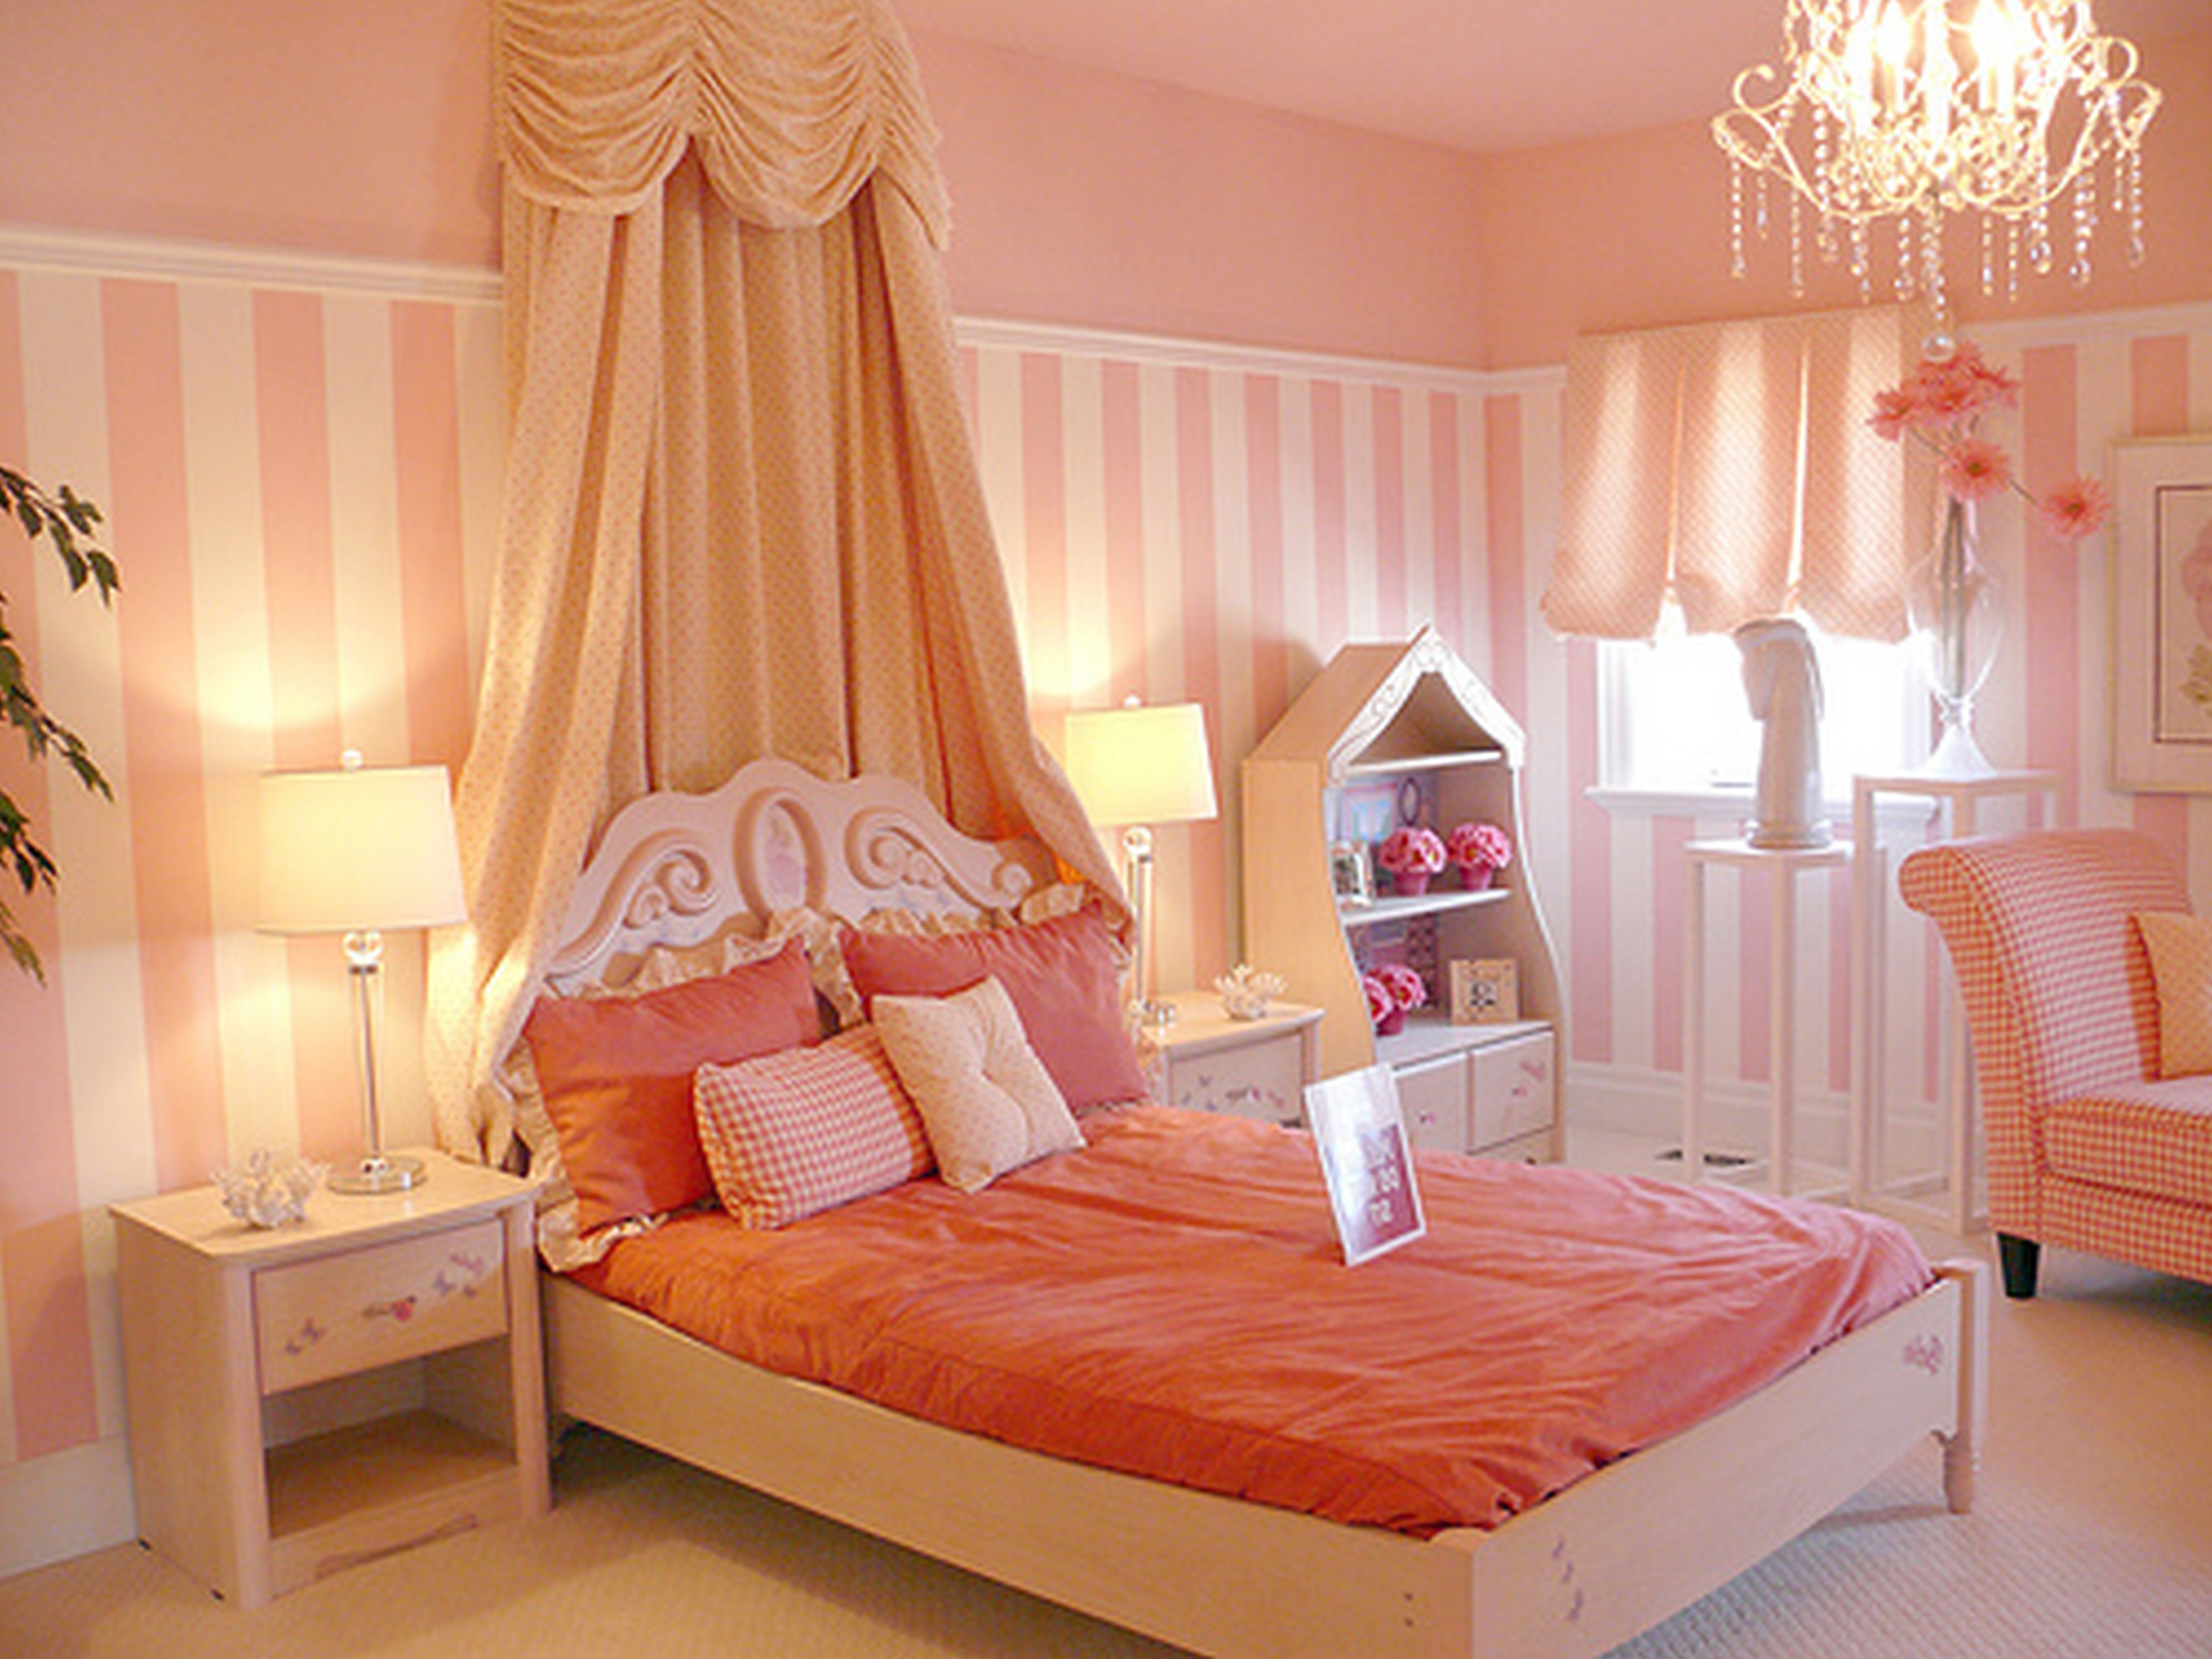 Bedroom Girl Bedroom Ideas Painting Crystal Chandeliers in sizing 5000 X 3750